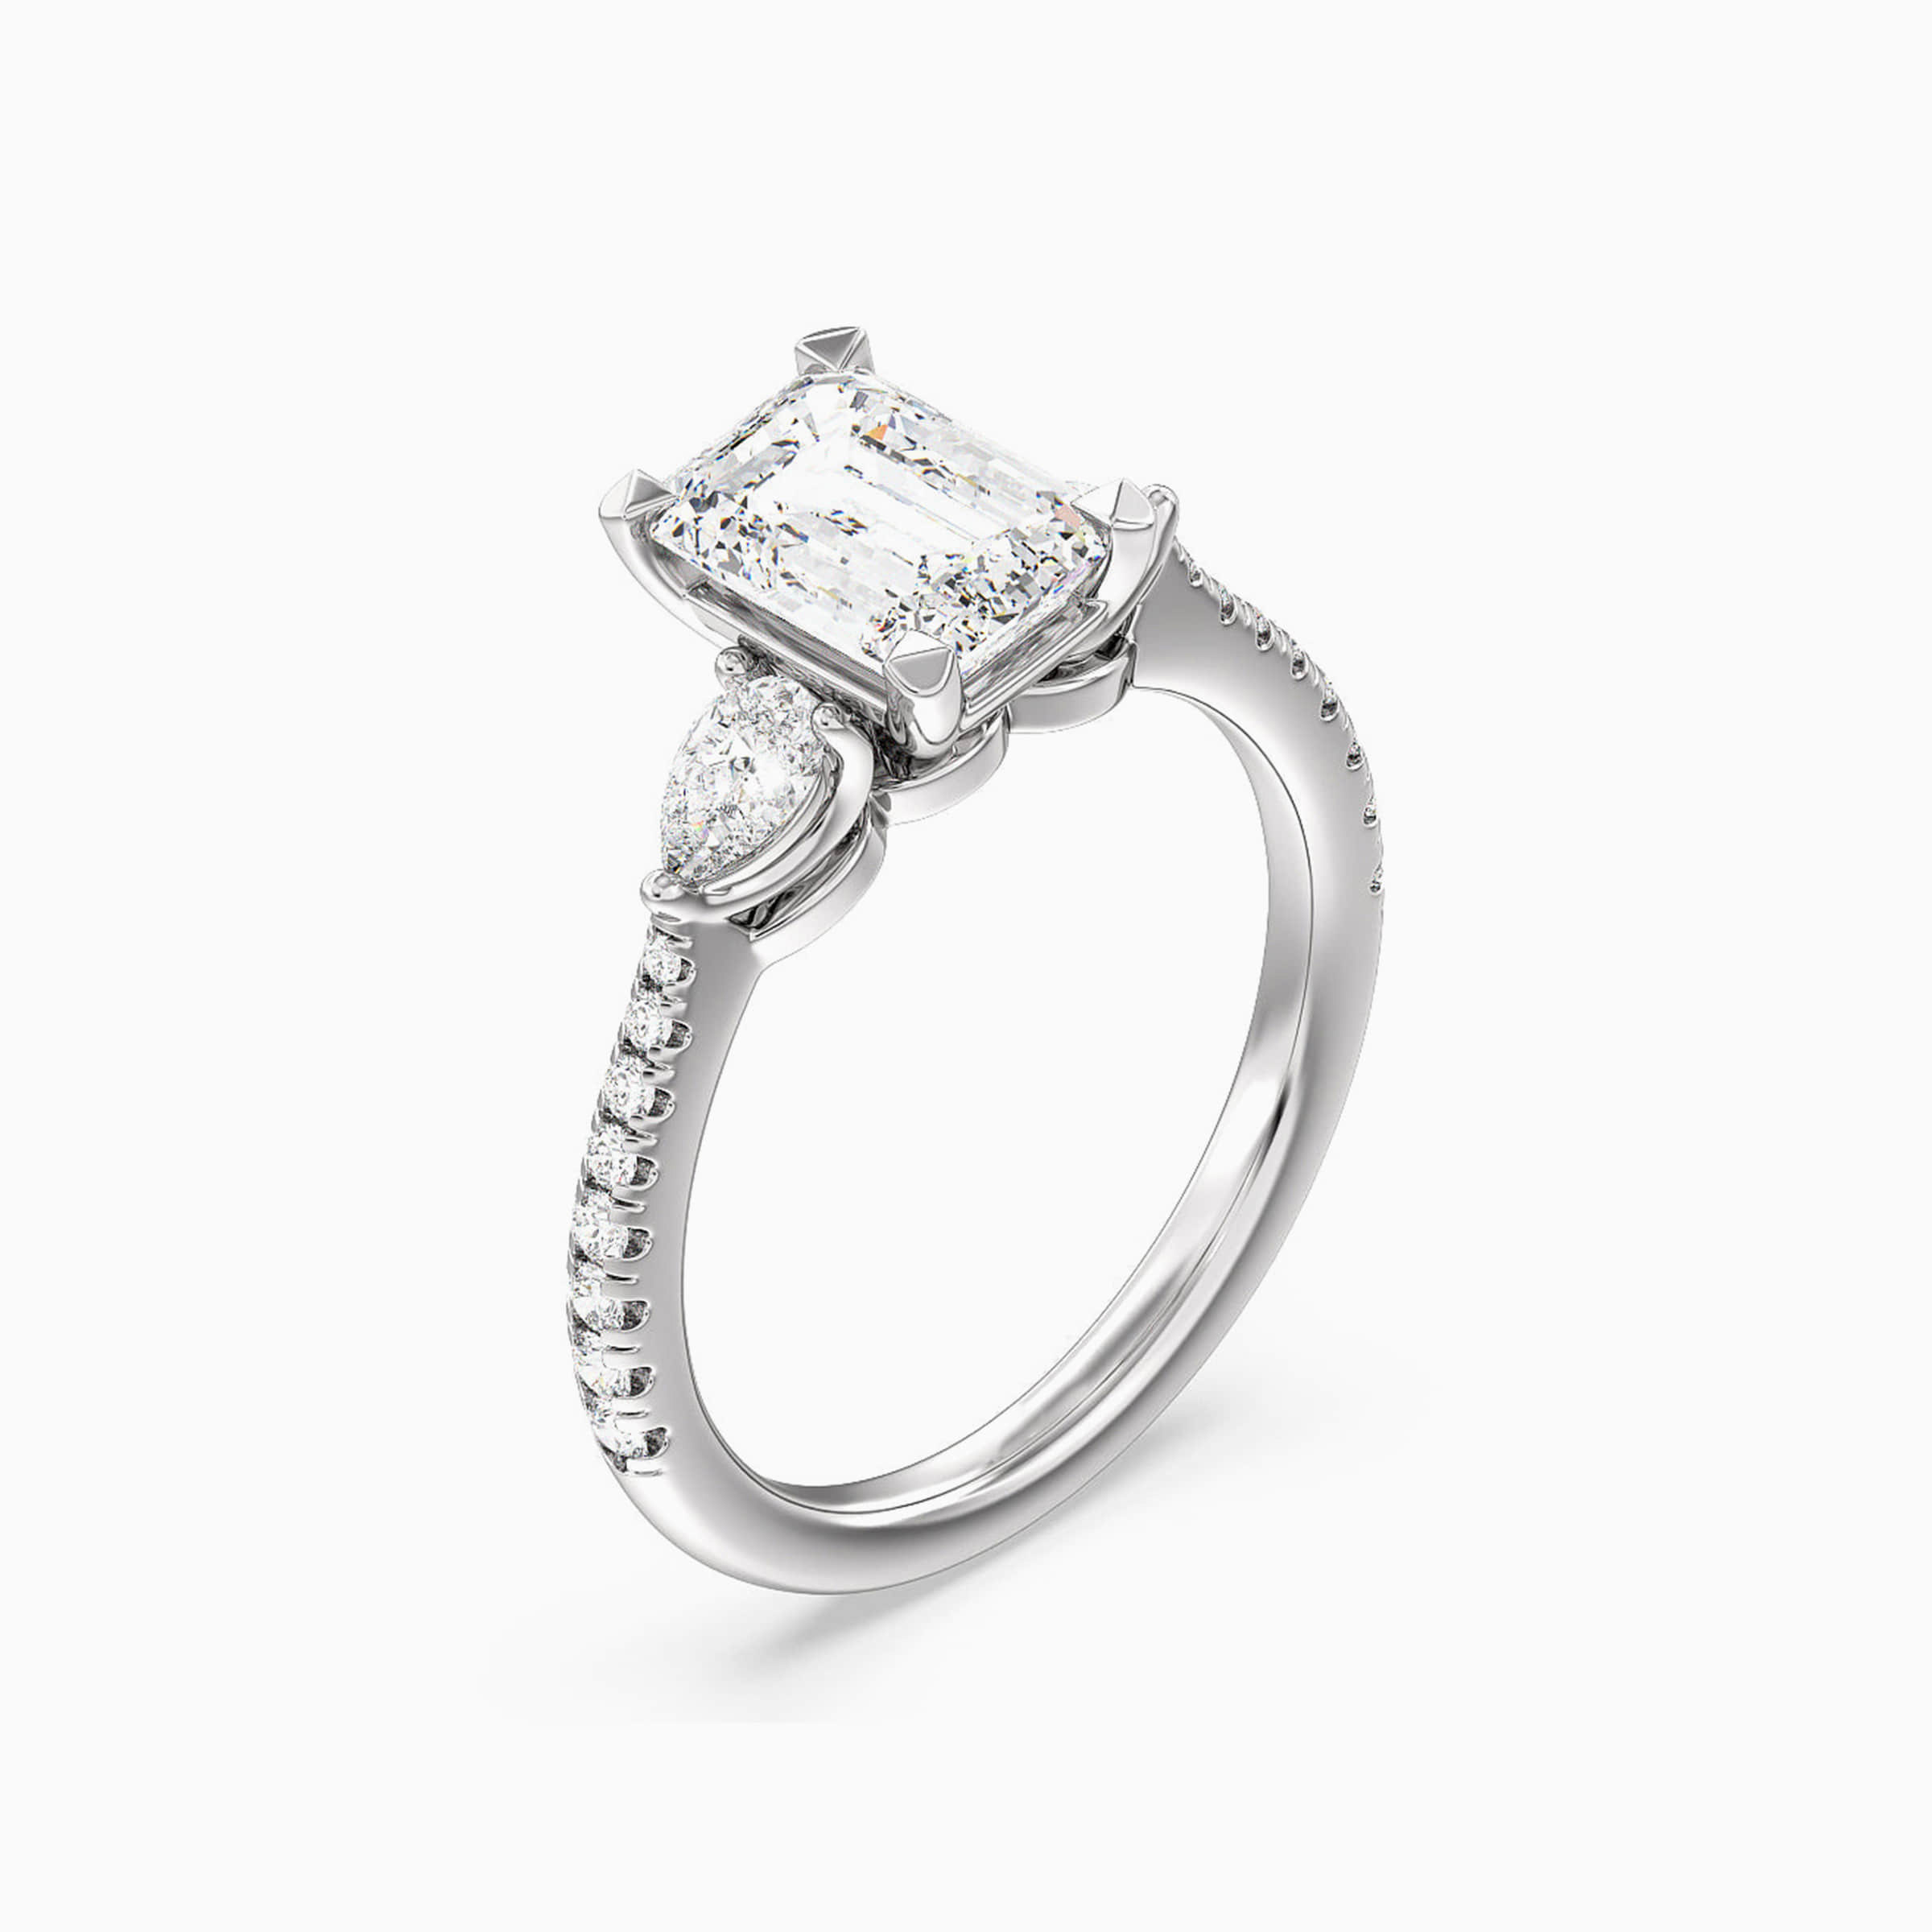 Darry Ring three stone emerald cut engagement ring in platinum